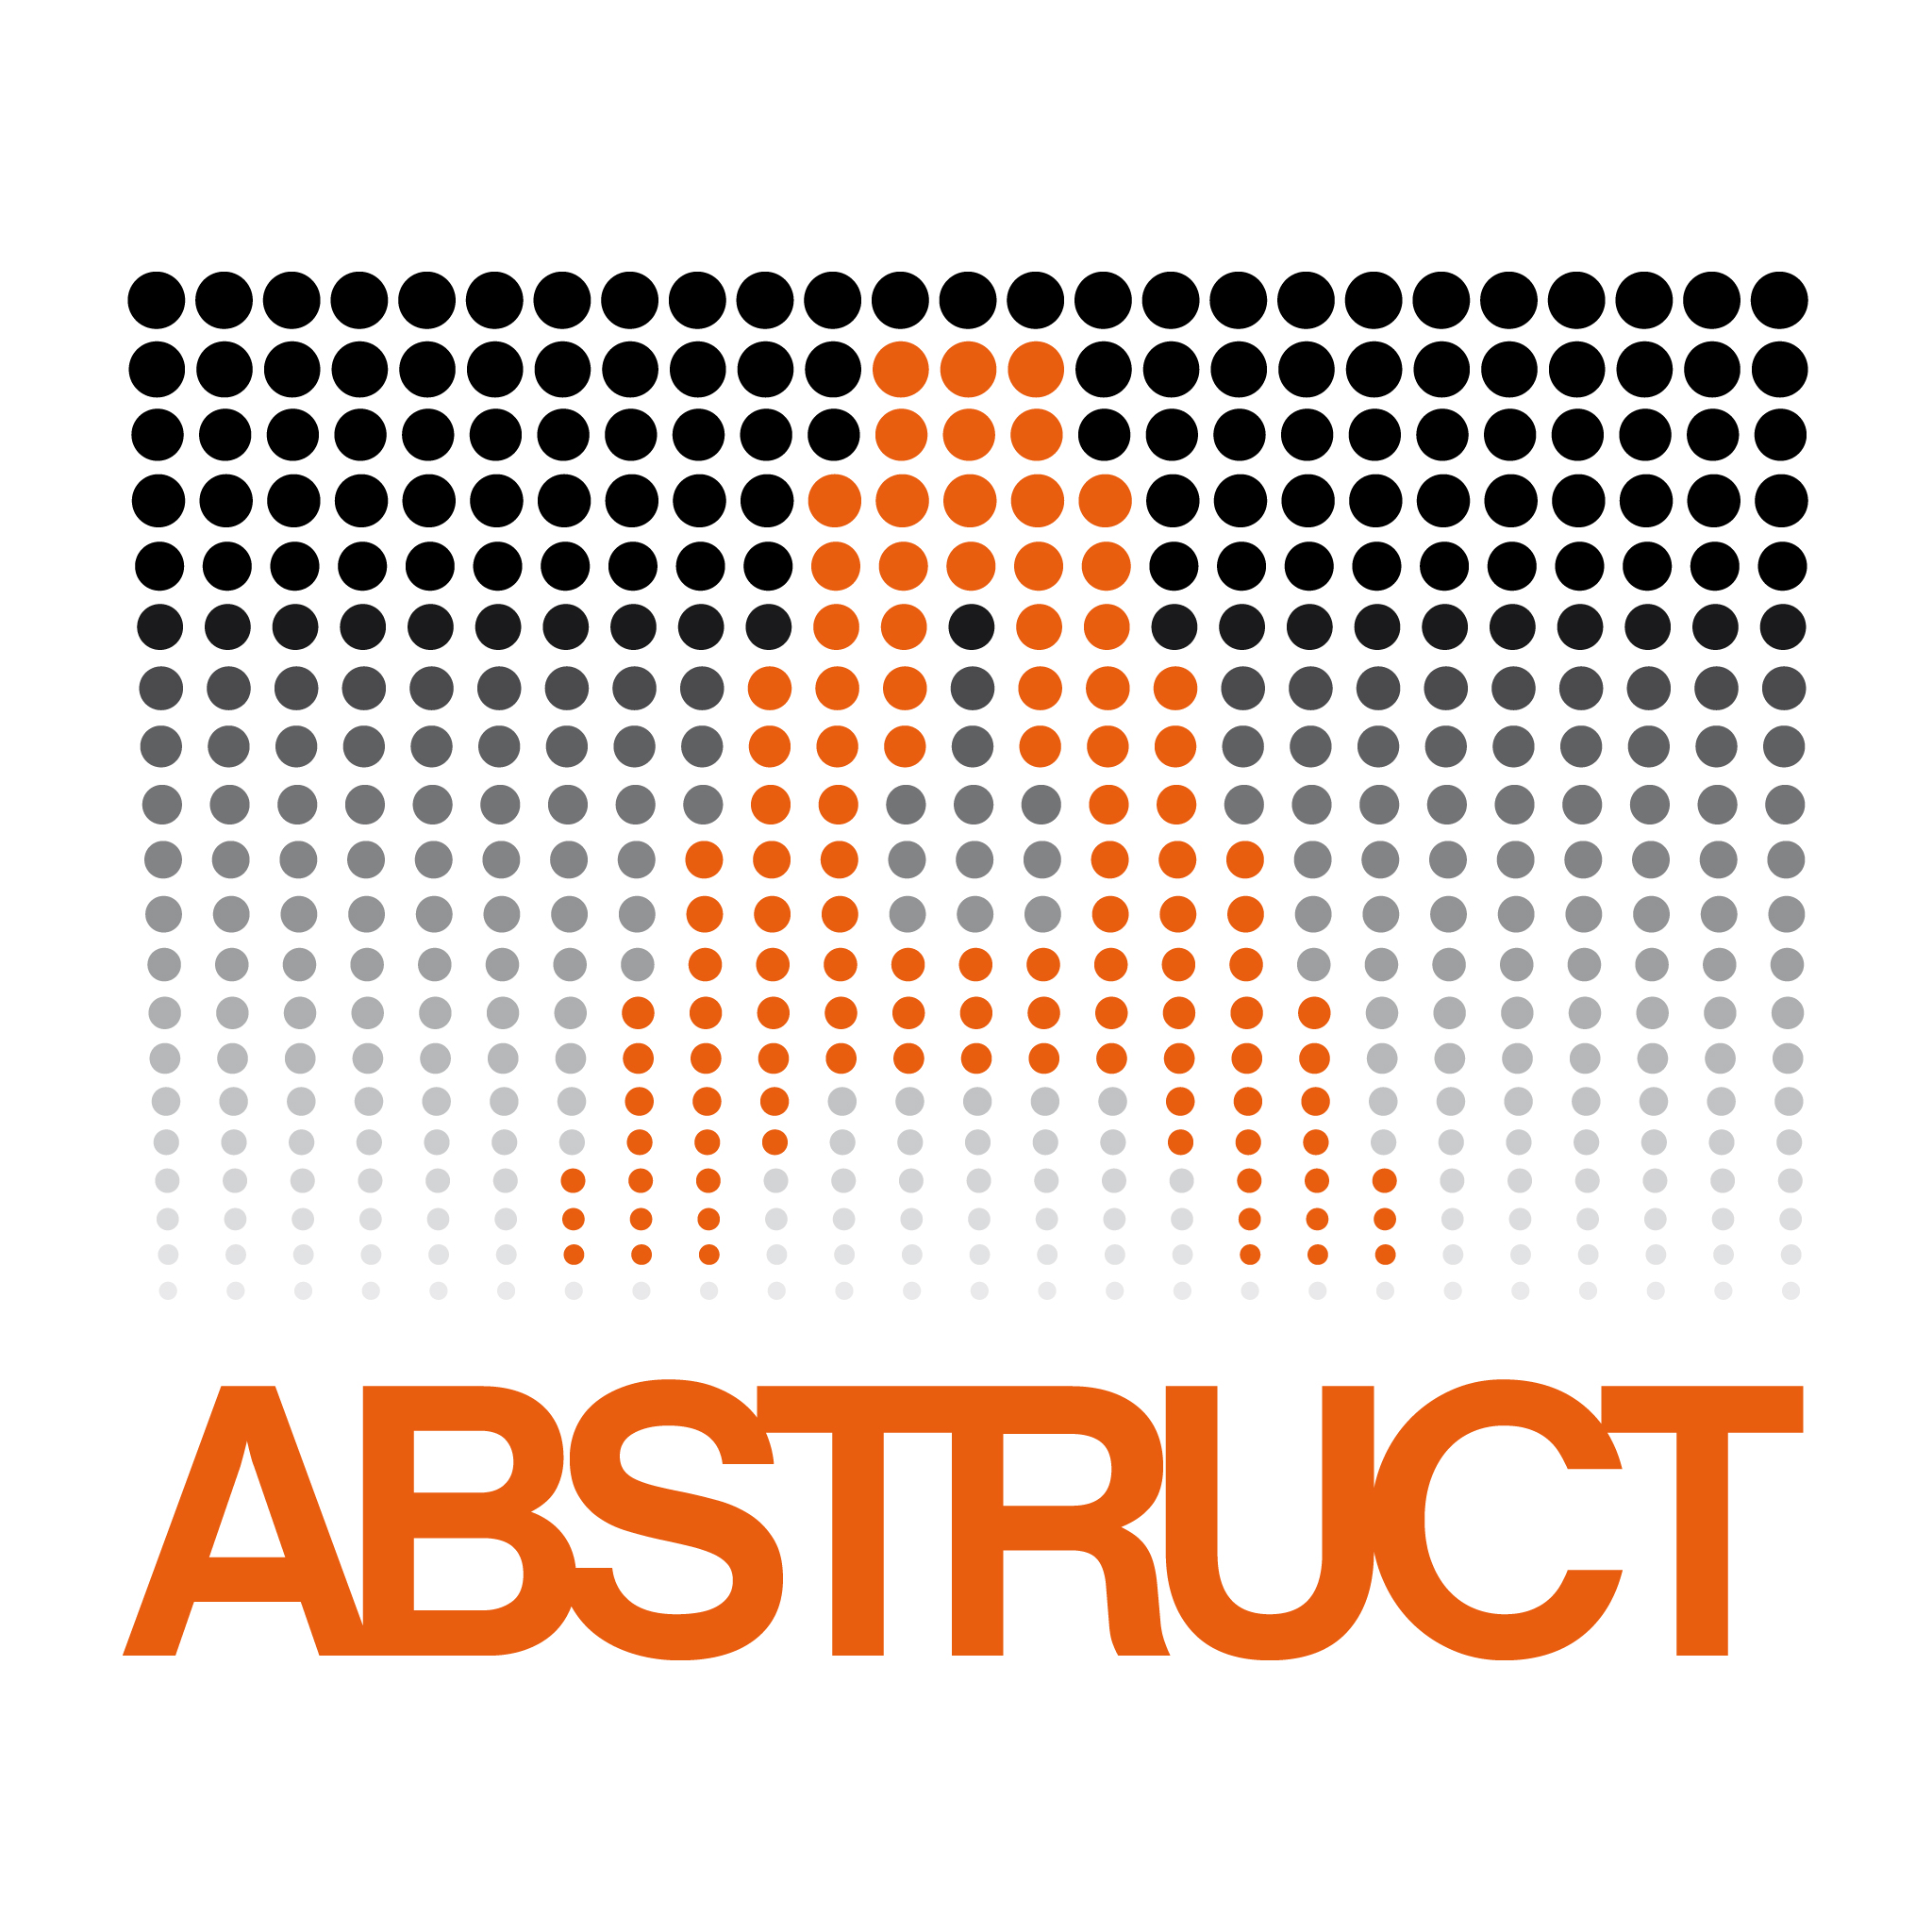 Abstruct logo